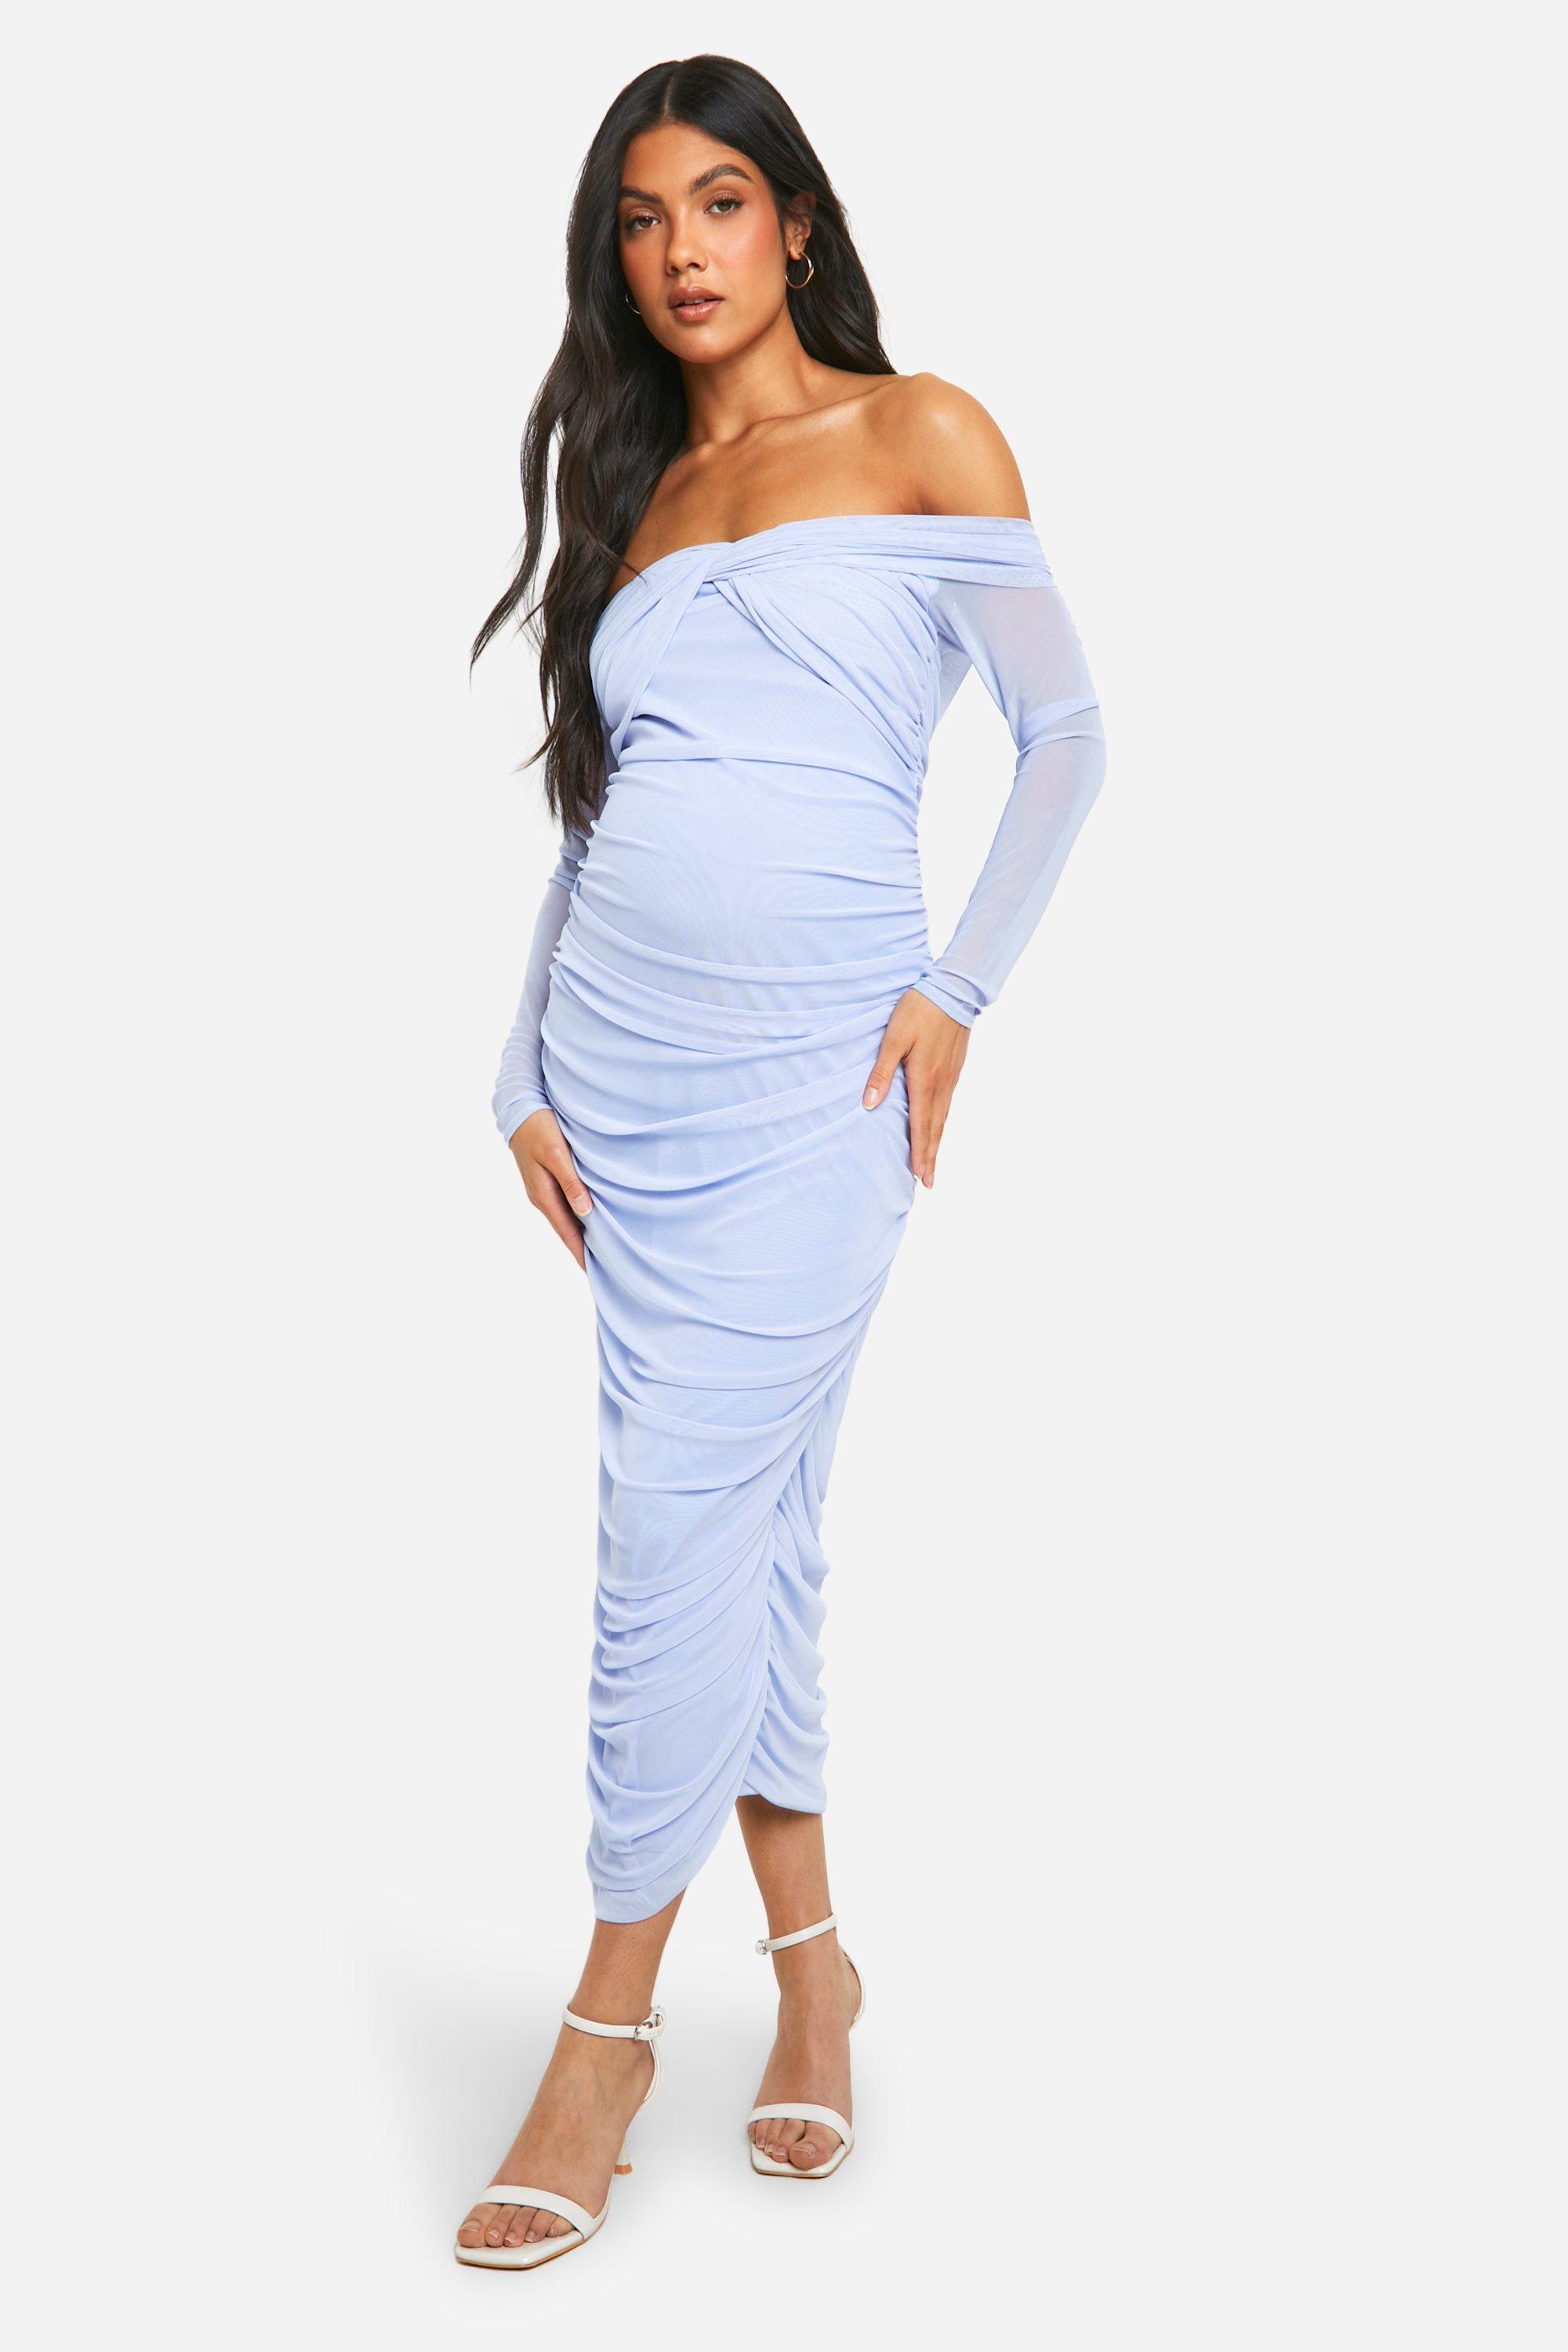 Boohoo Maternity Knot Front Mesh Bardot Midaxi Dress, Light Blue